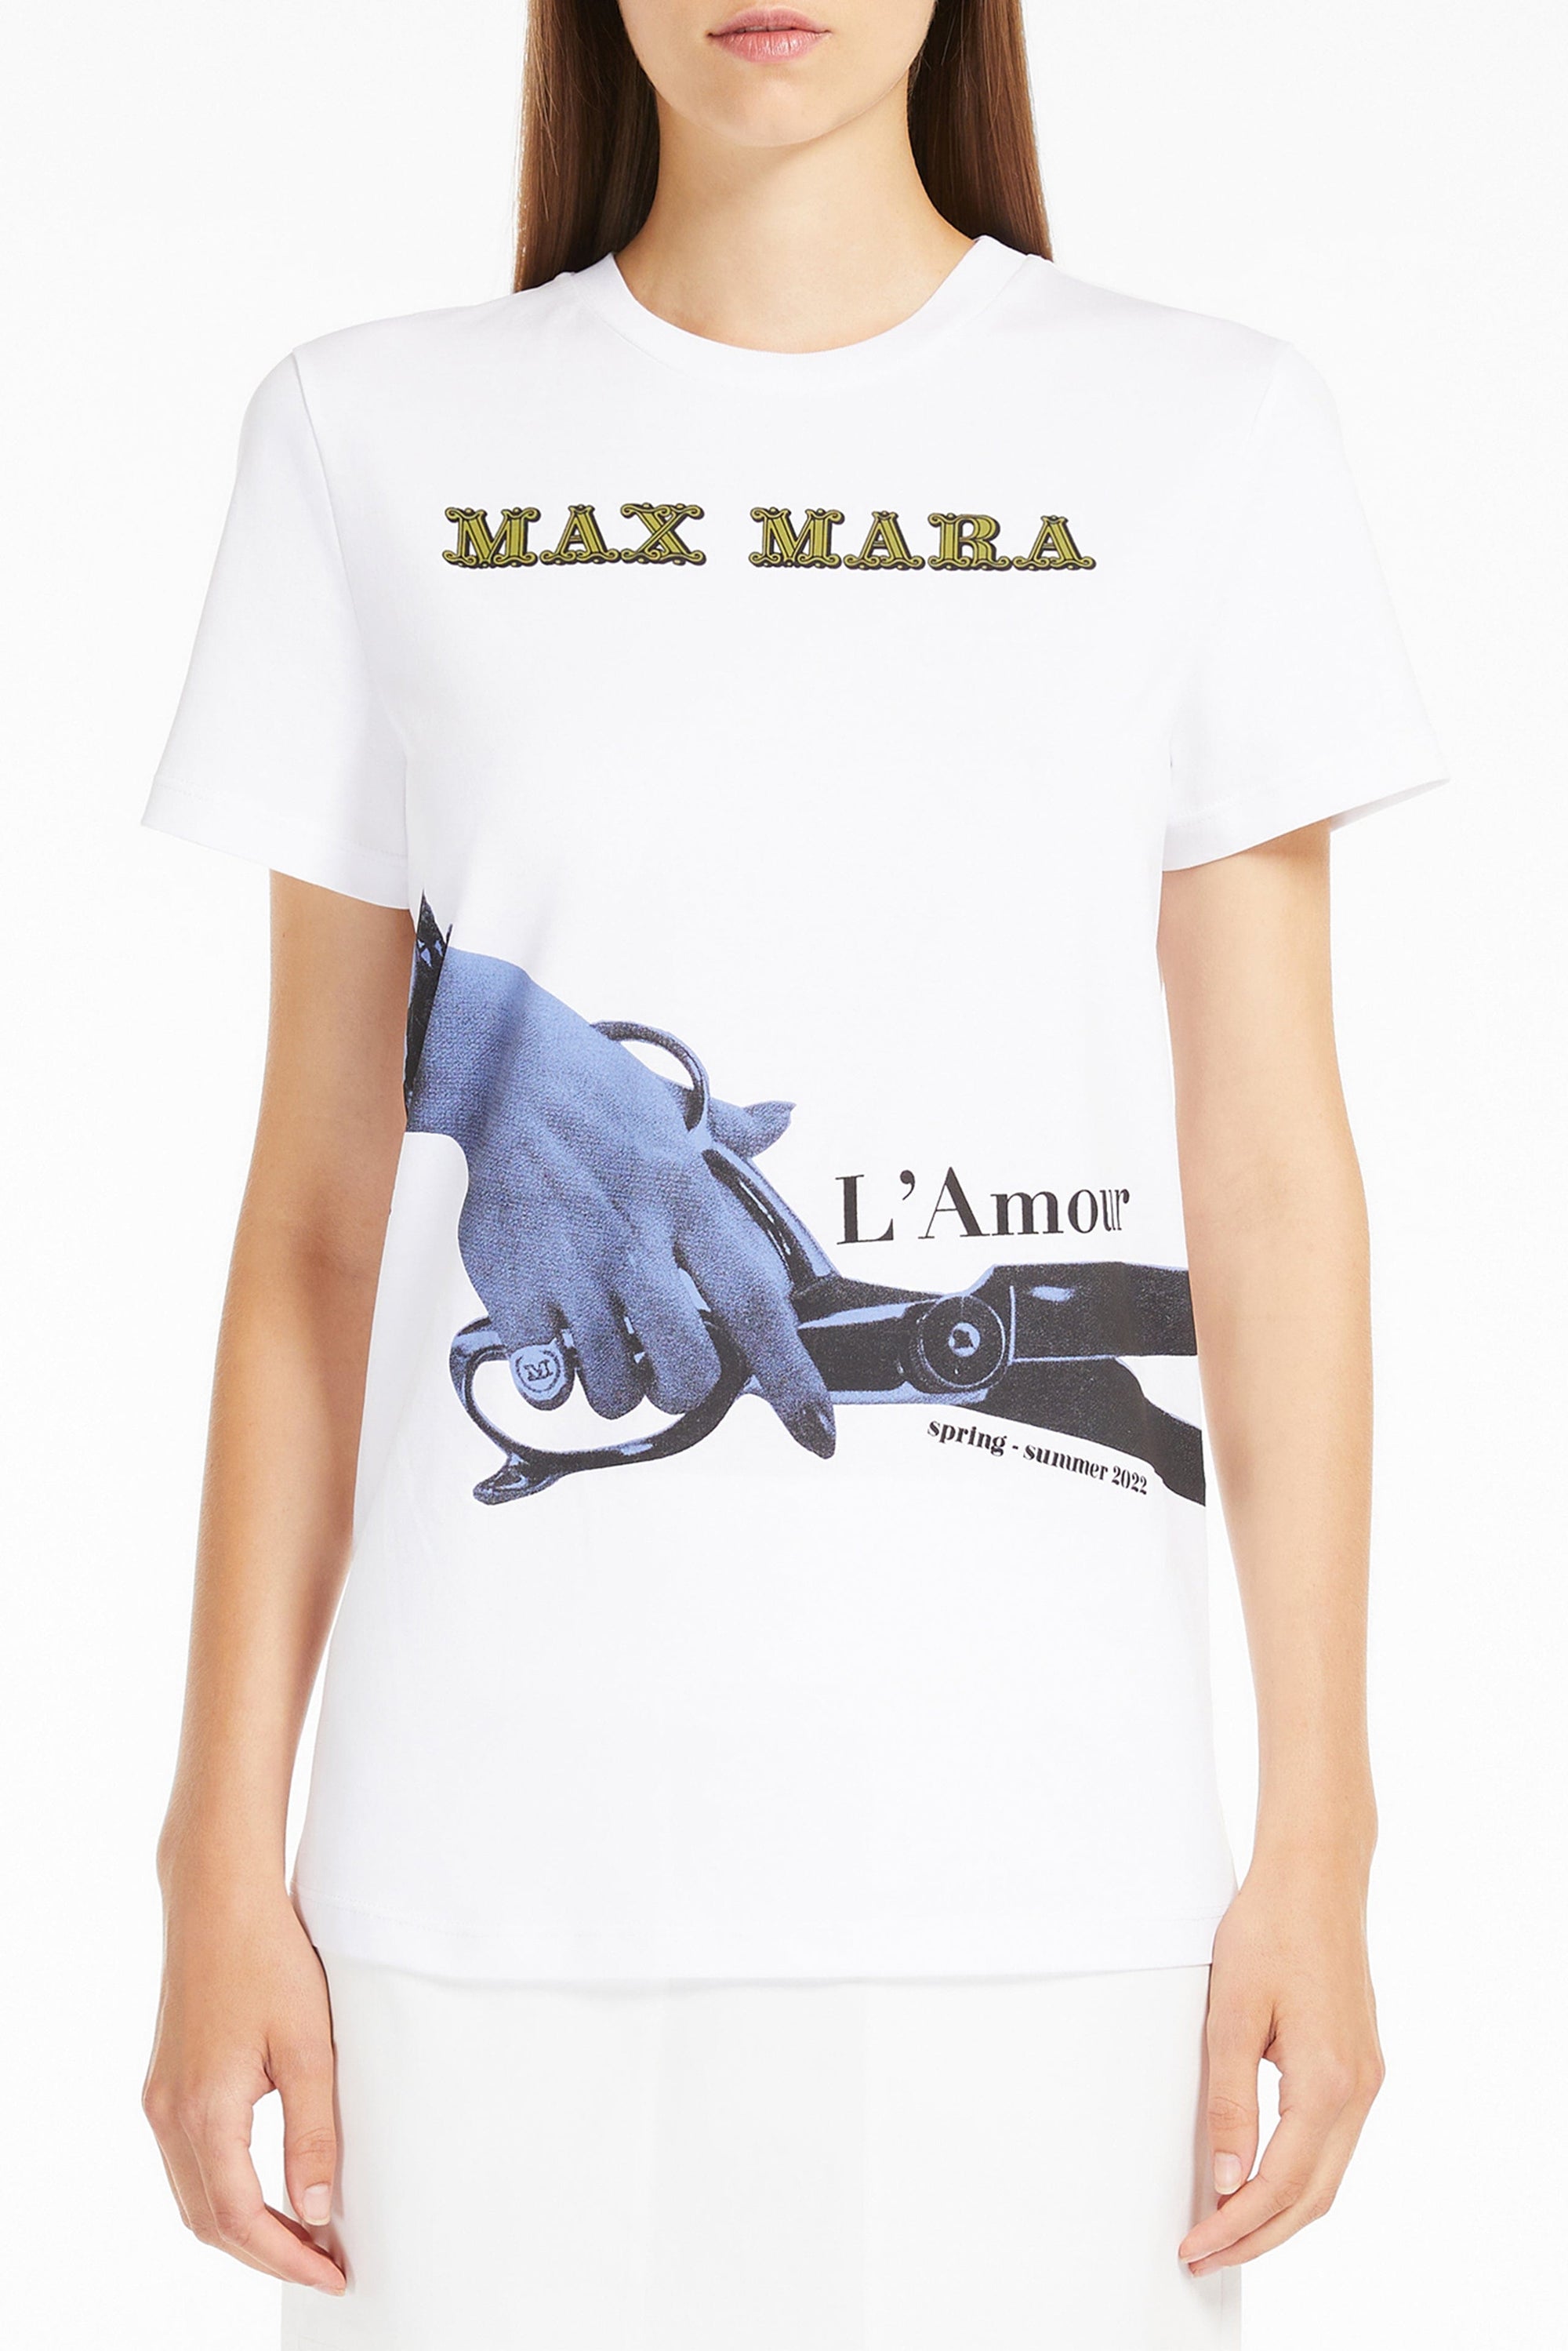 MAXMARA BODY/ TOP  BIANCO STAMPA / XS T-shirt in Cotone Fantasia Veggia Max Mara